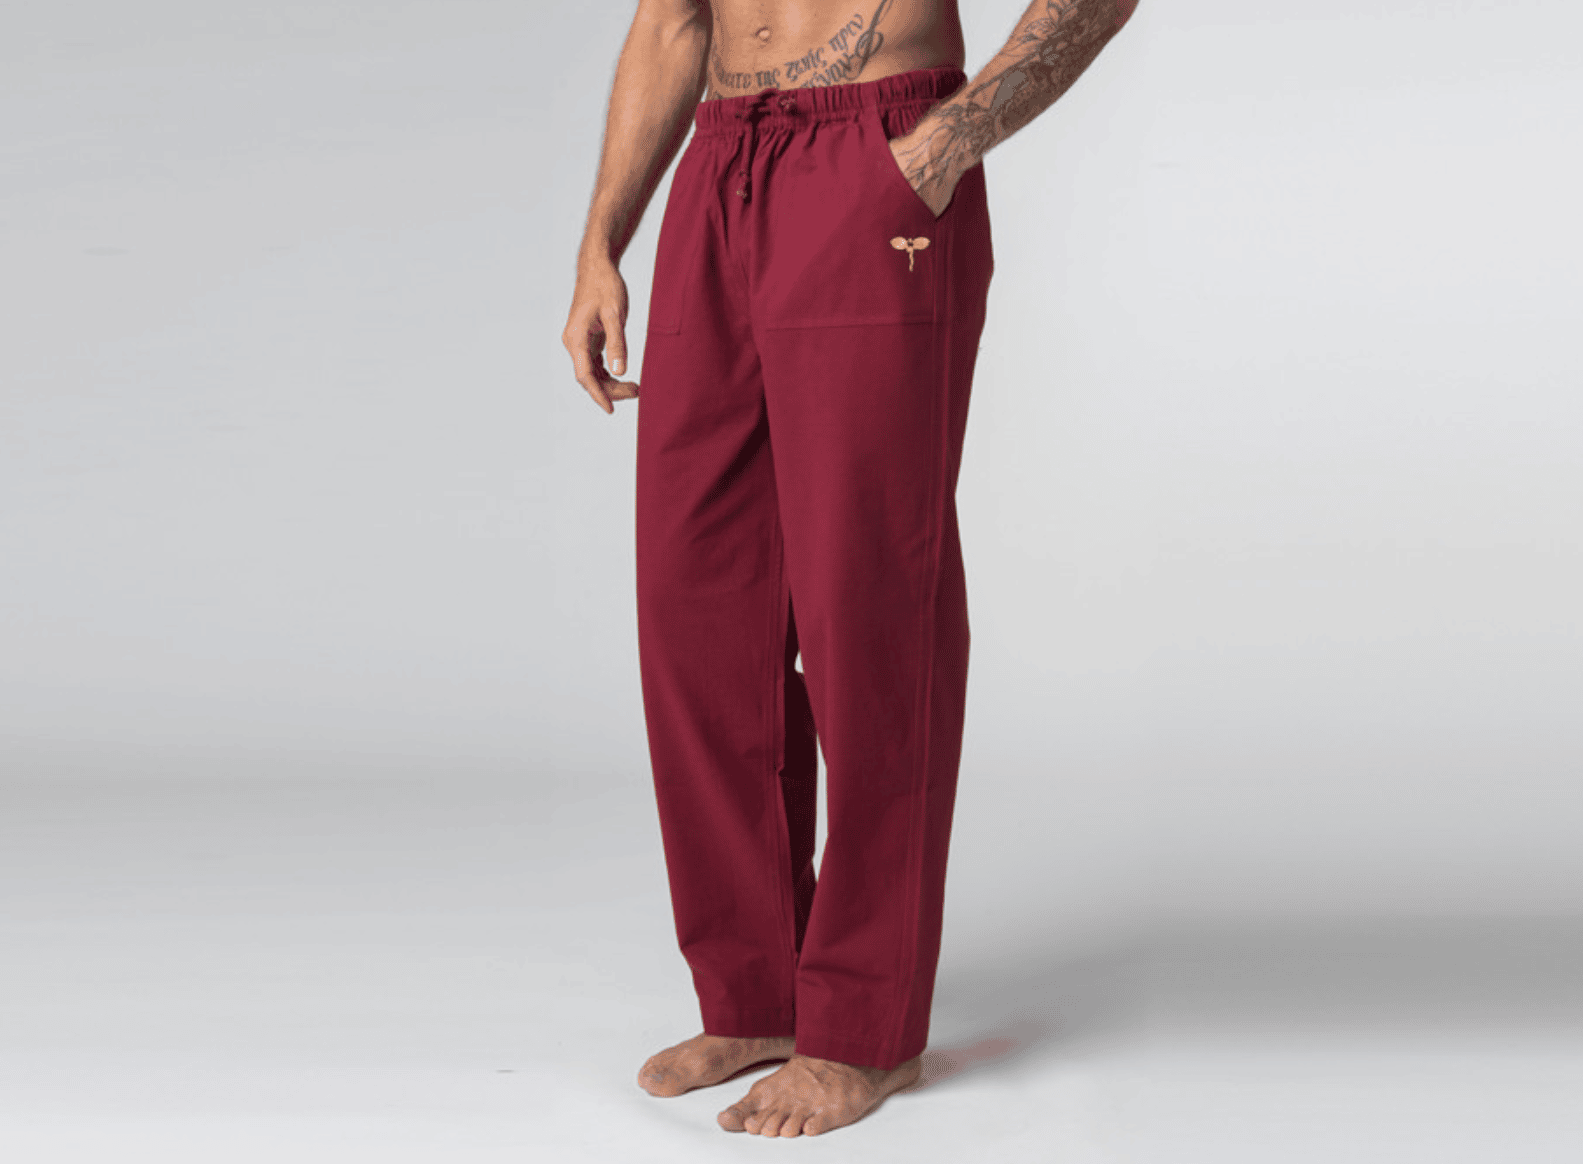 Pantalon Yoga Homme Bordeaux